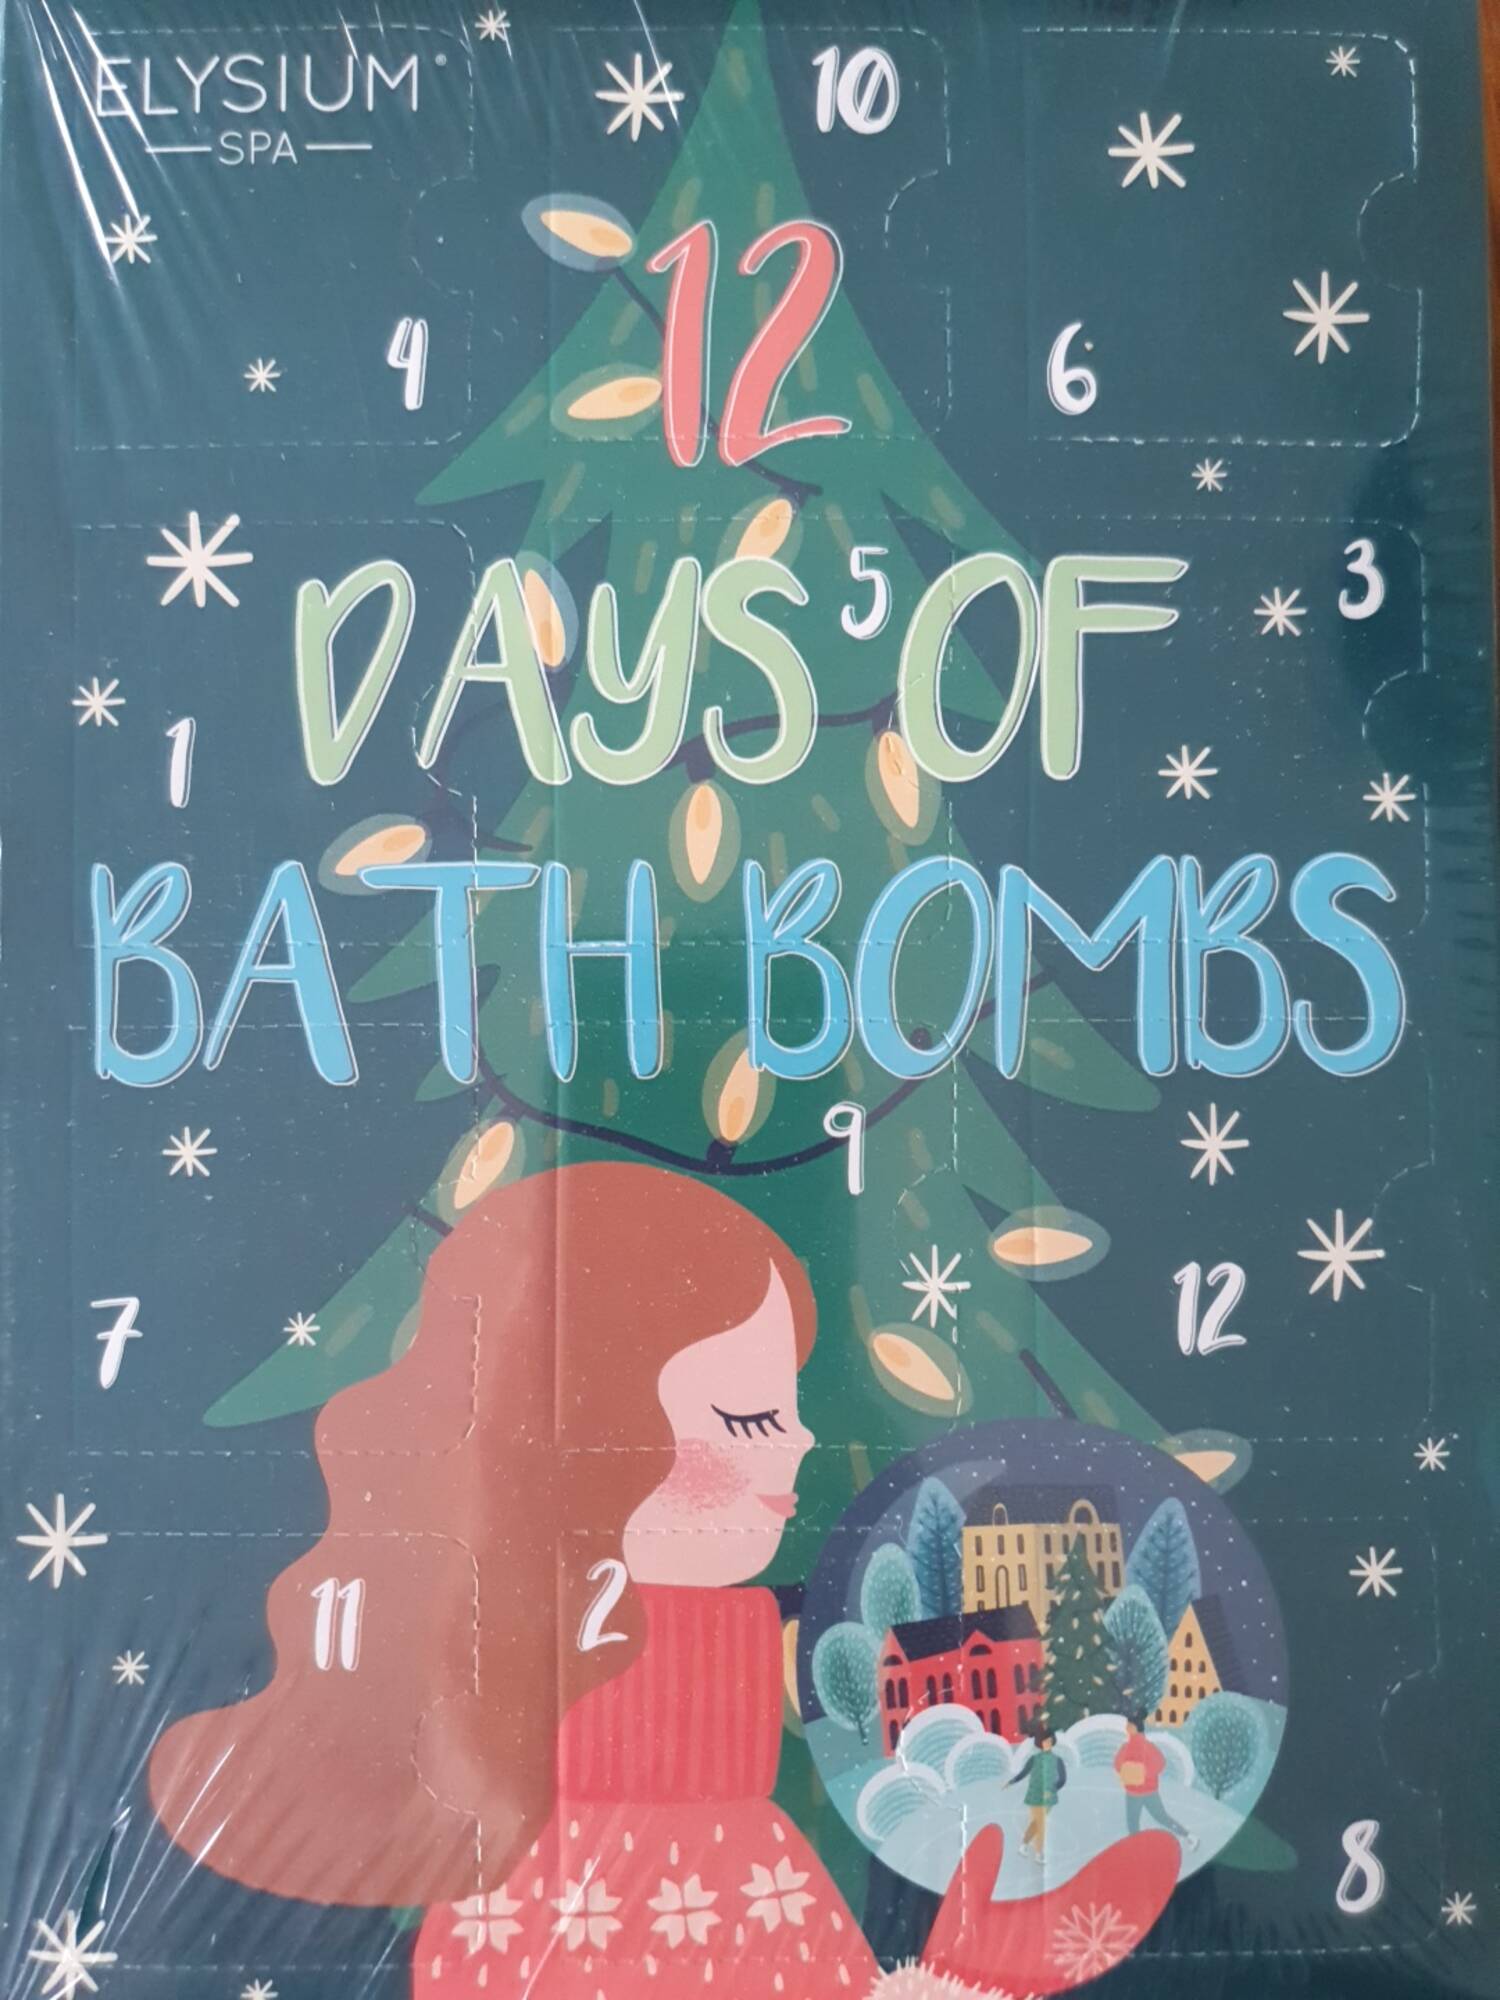 ELYSIUM - 12 days of bath bombs